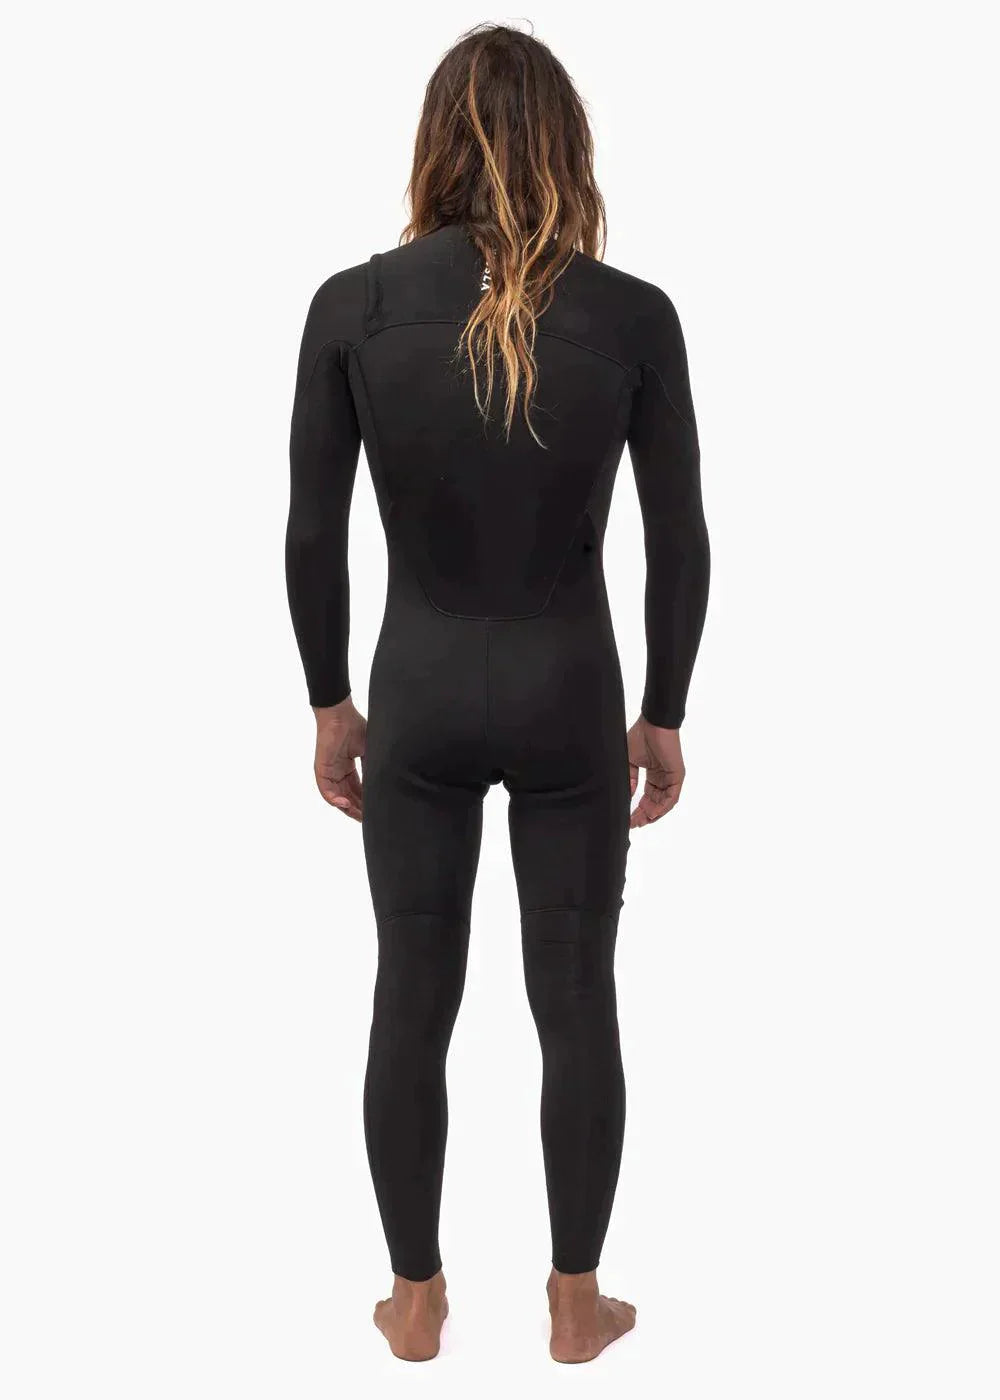 7 Seas 3-2 Chest Zip Full Suit - SoHa Surf Shop